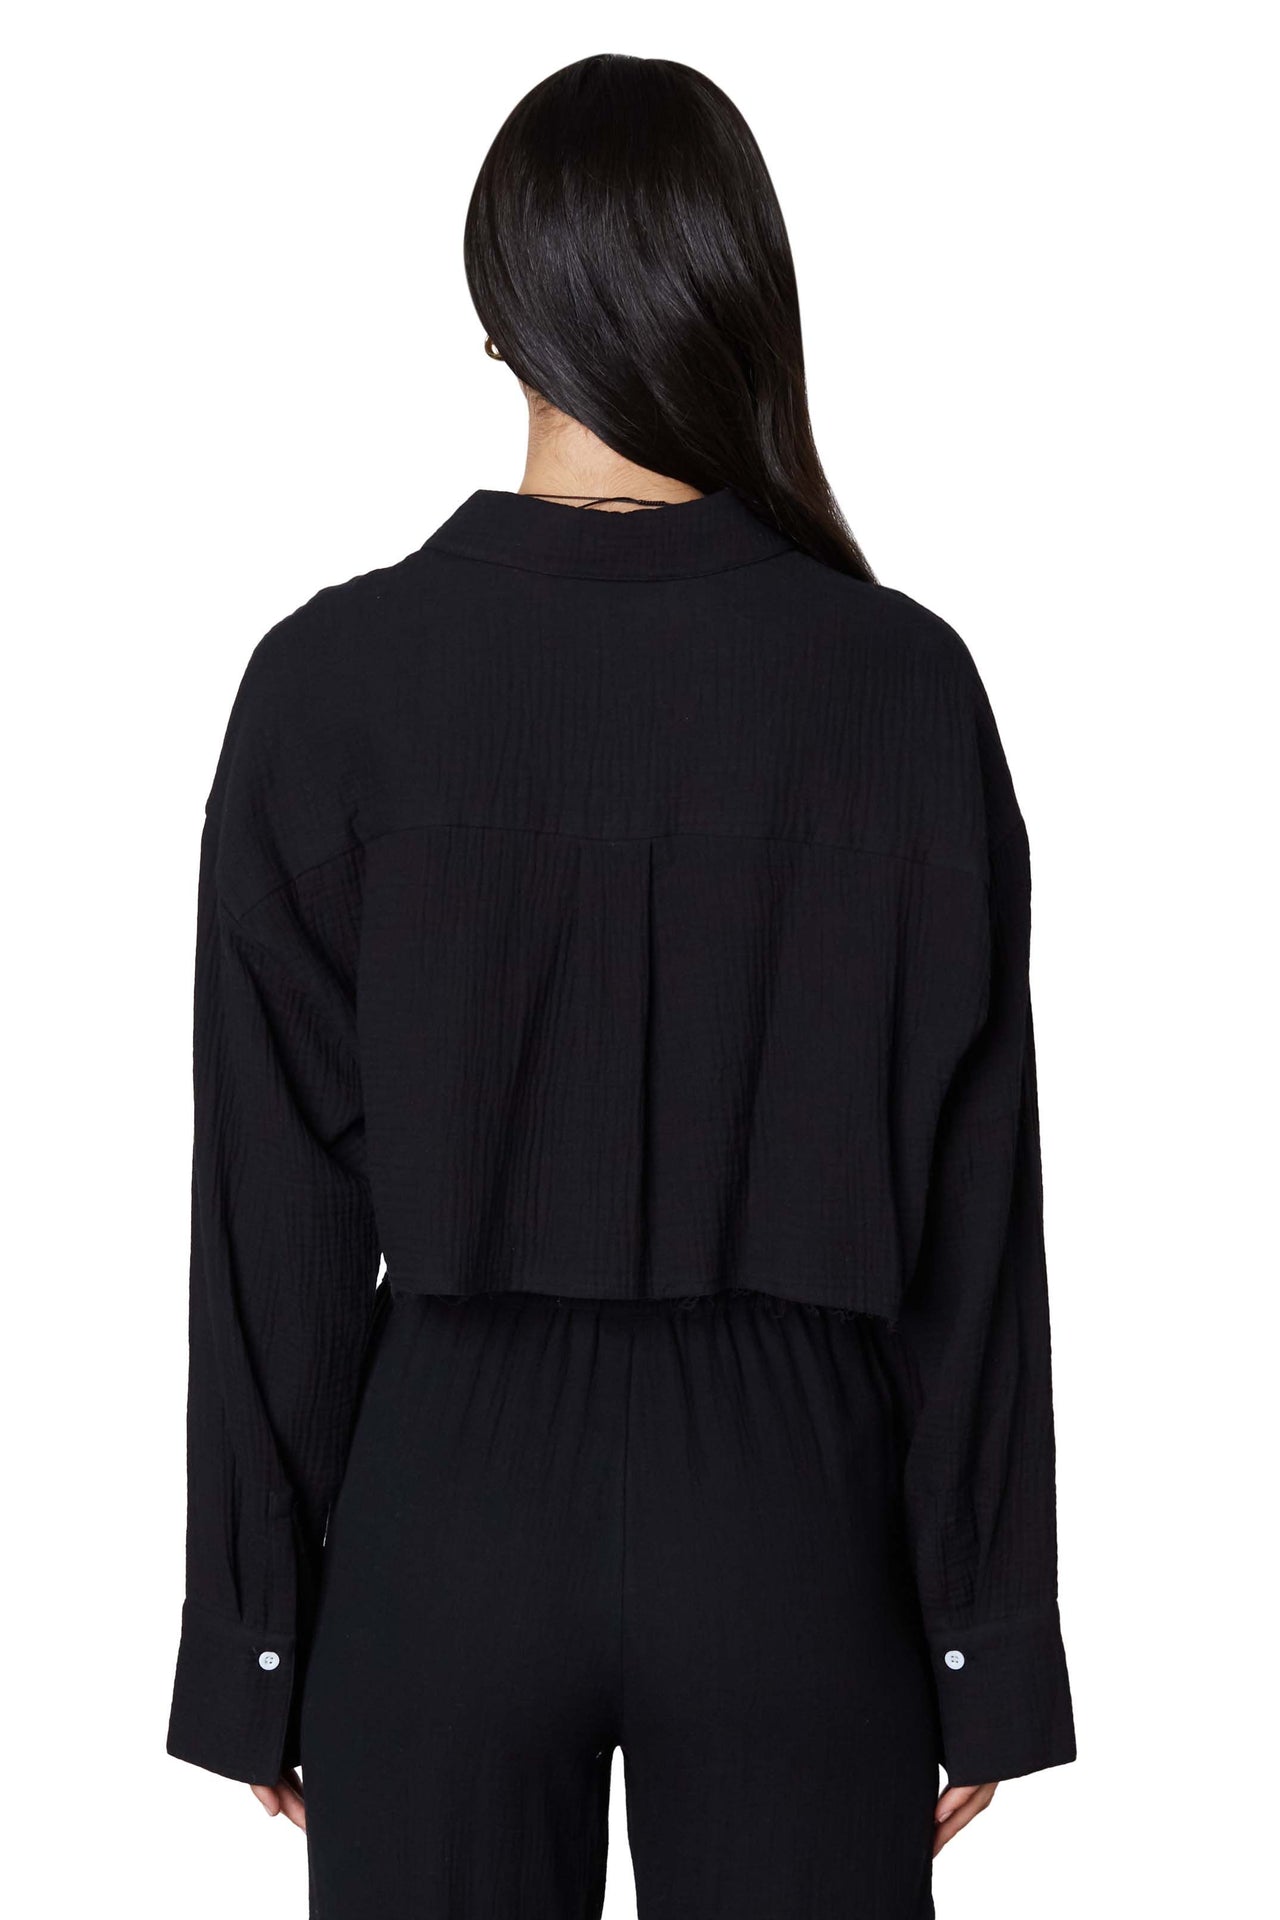 Austin Black Long Sleeve Shirt, Short Tee by NIA | LIT Boutique